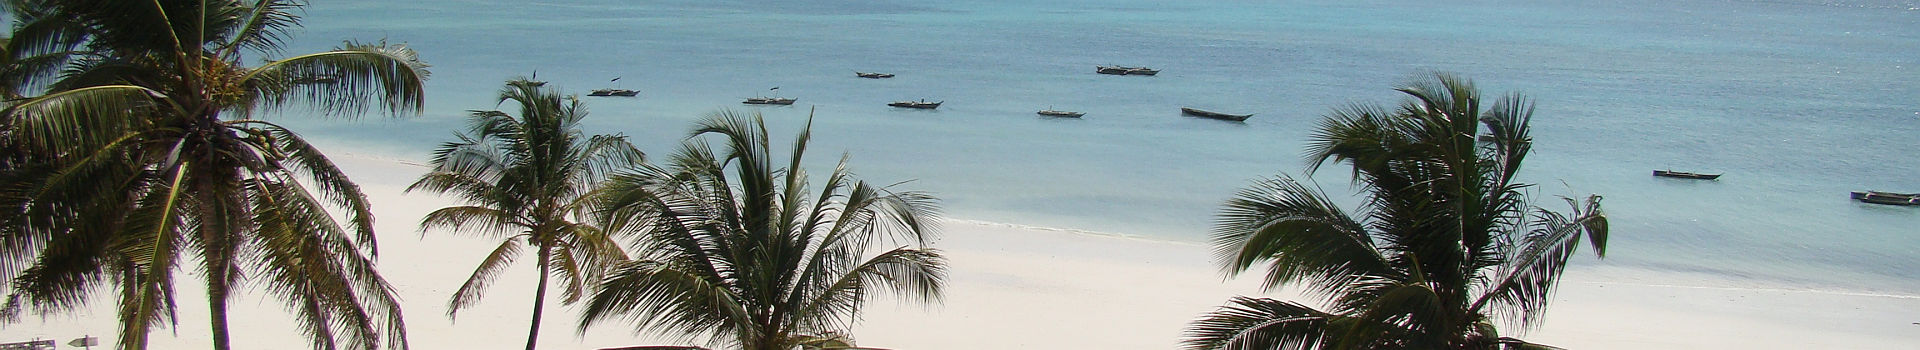 Dongwe Ocean View - Zanzibar